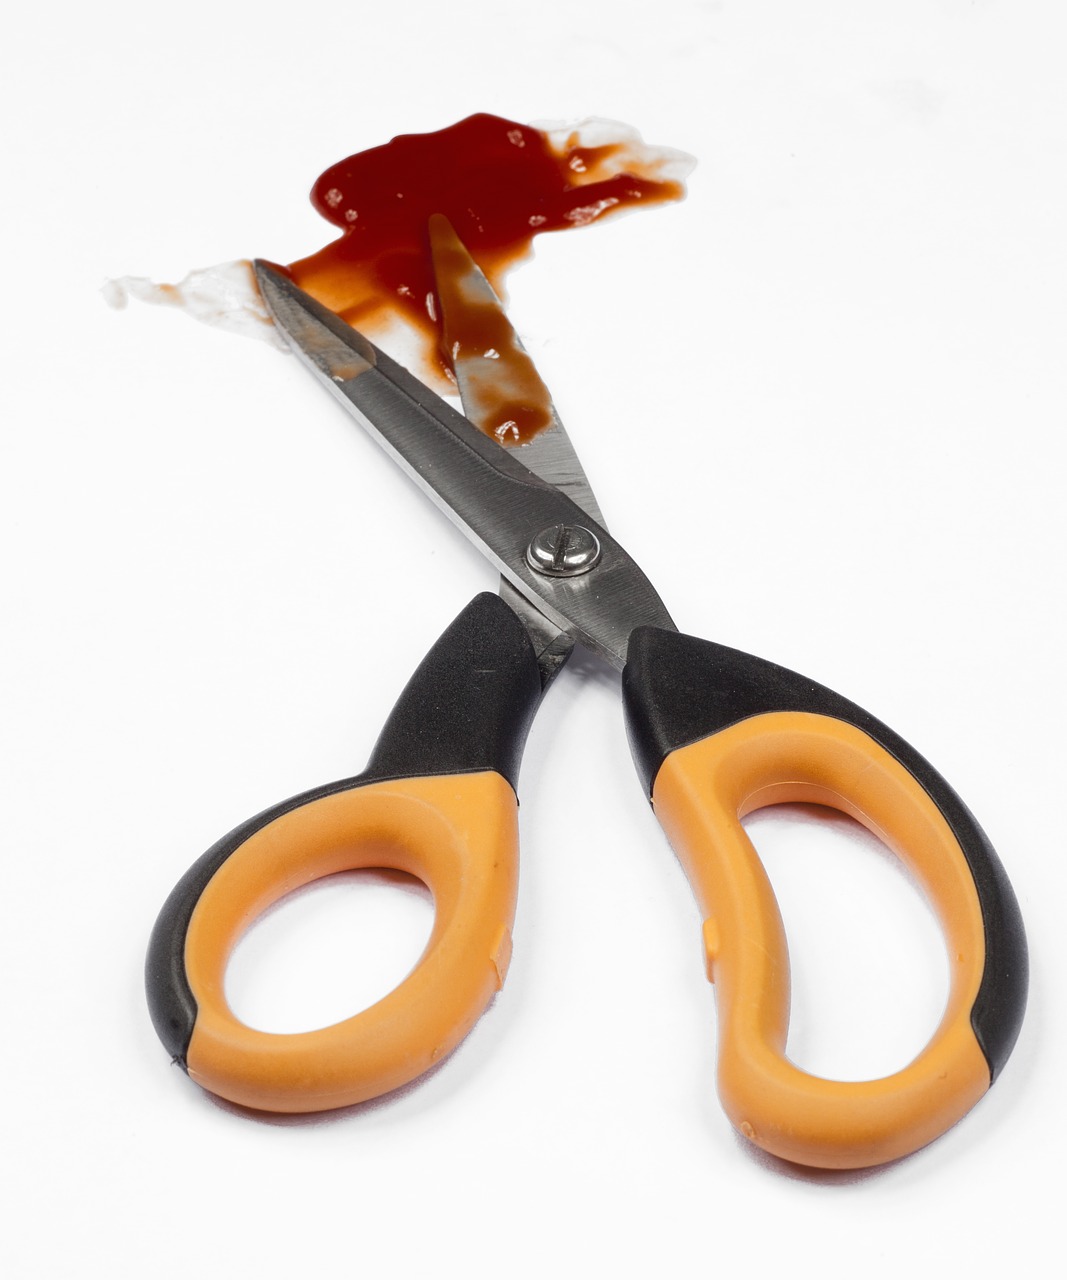 Image - scissors blood cut hurt lie